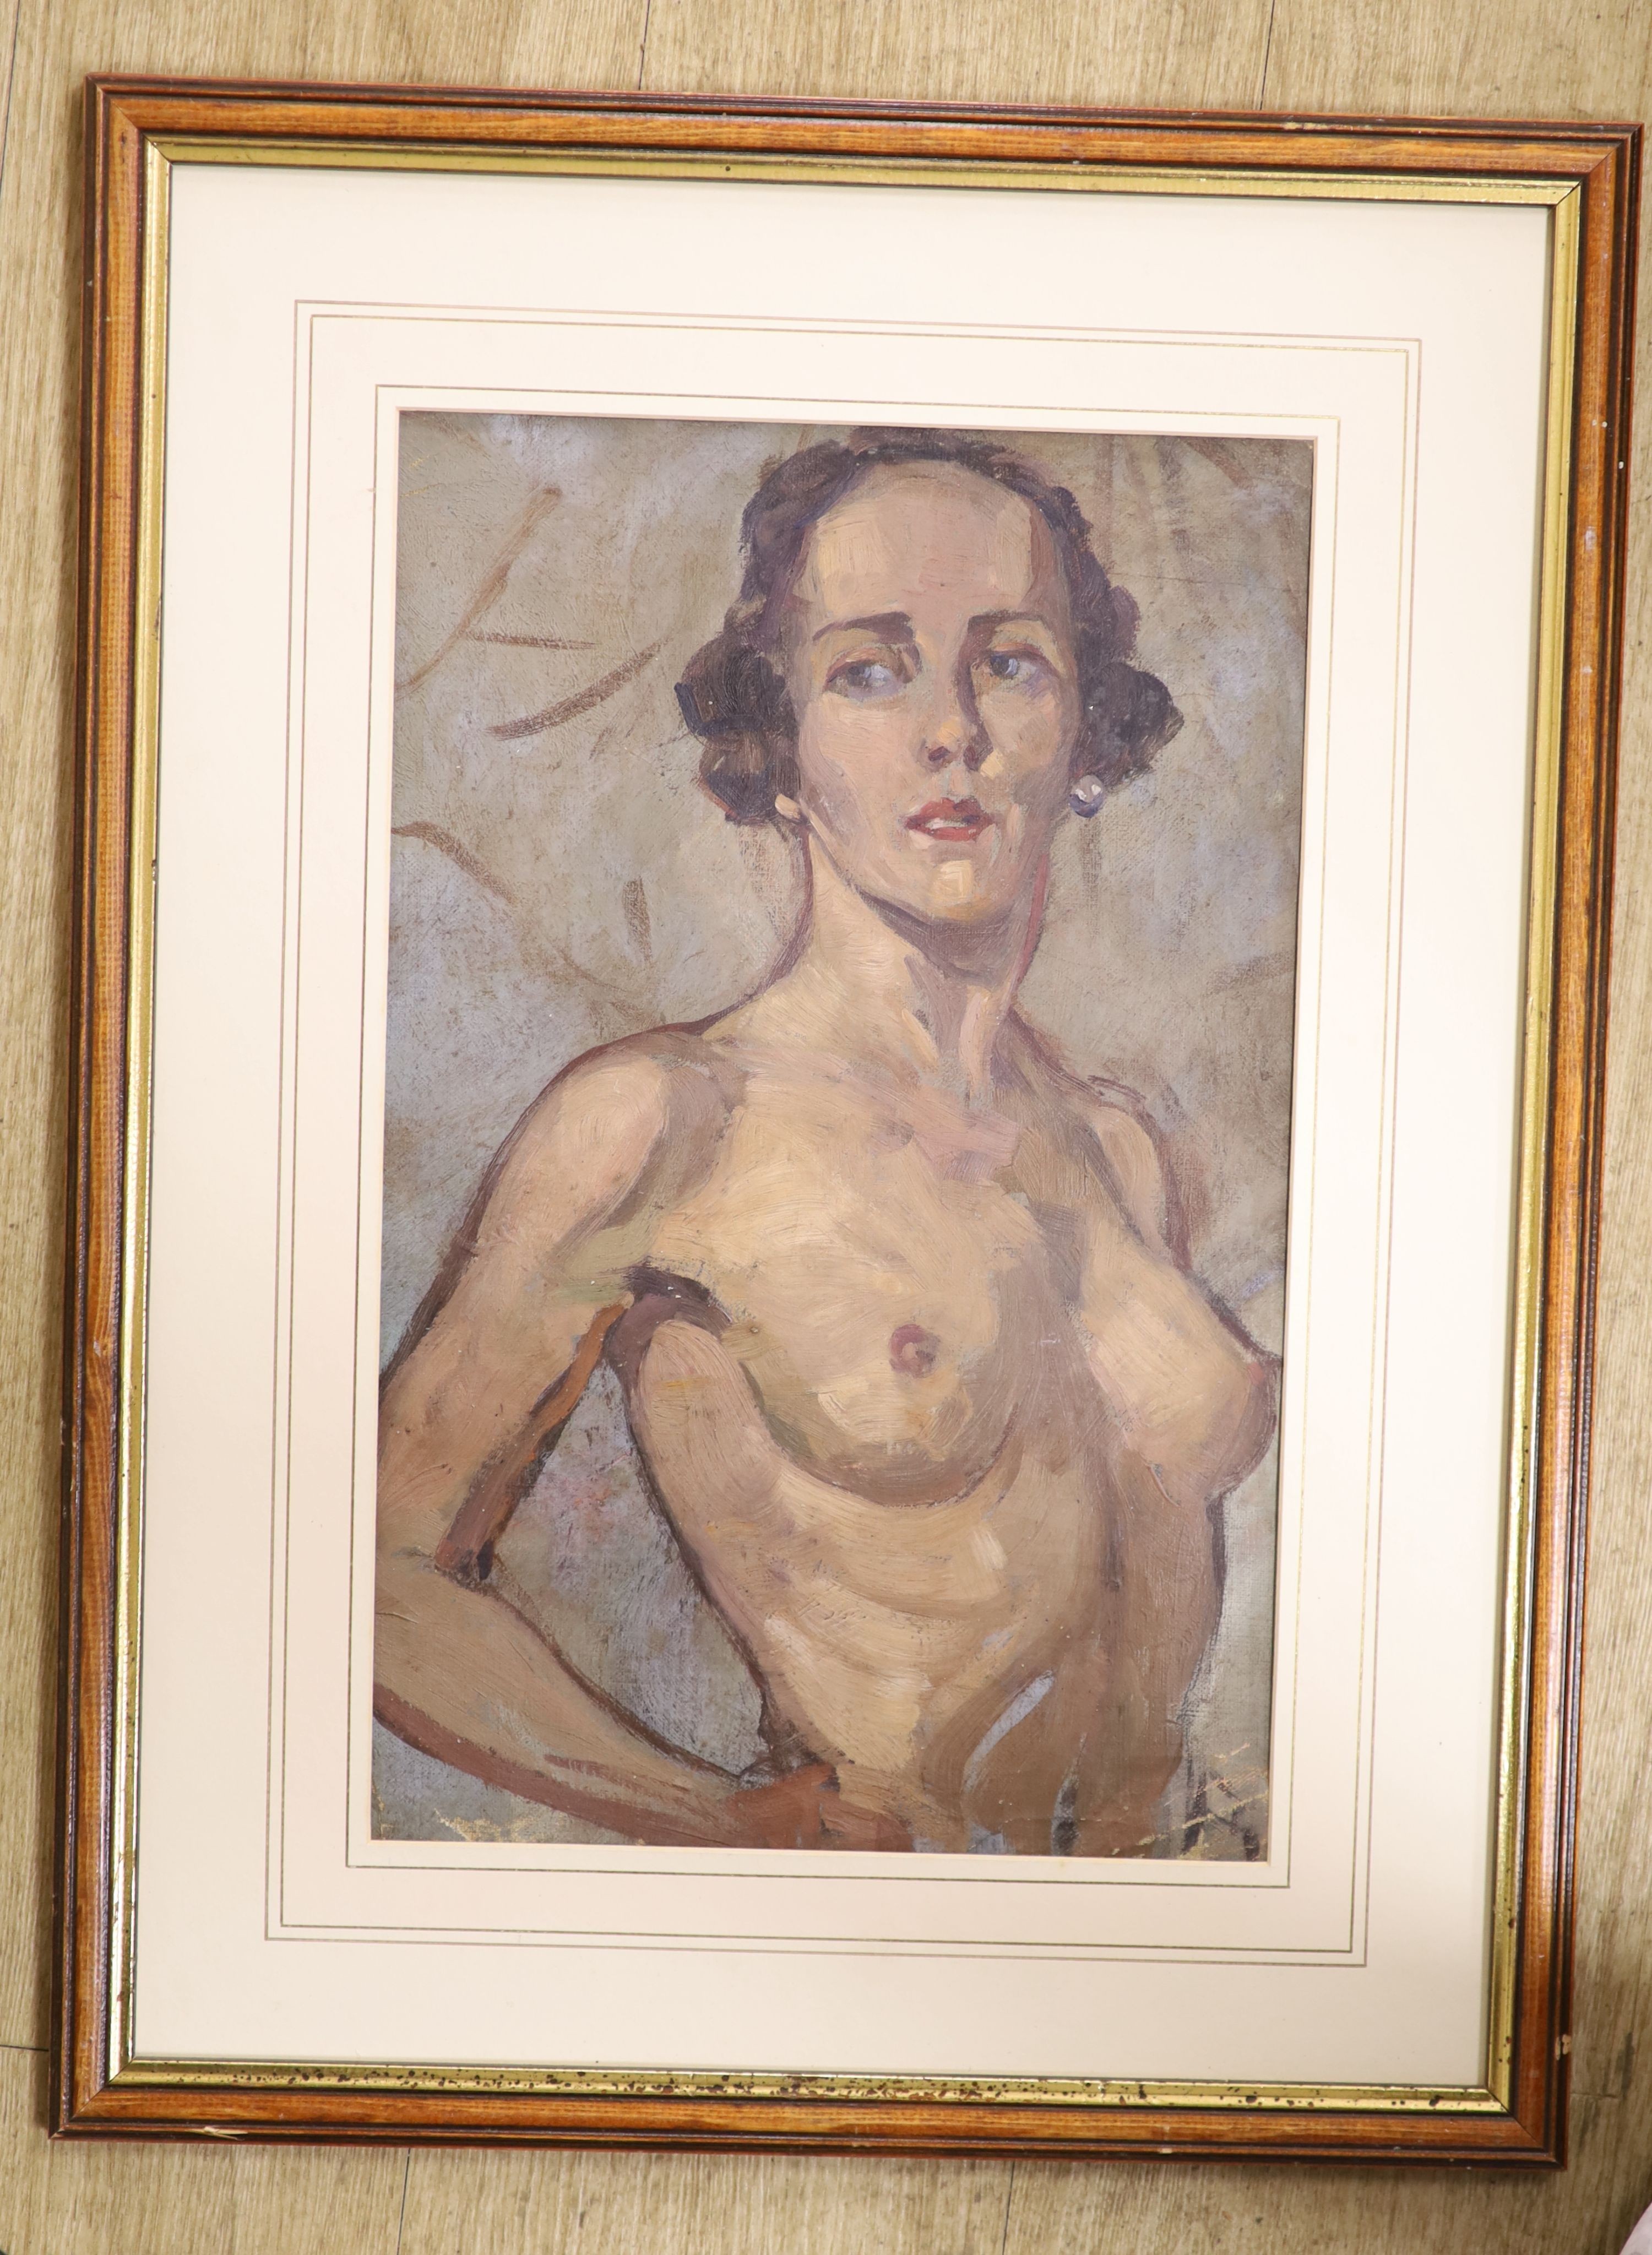 Ellis Silas (1885-1972), oil on canvas, Female nude, 42 x 27cm